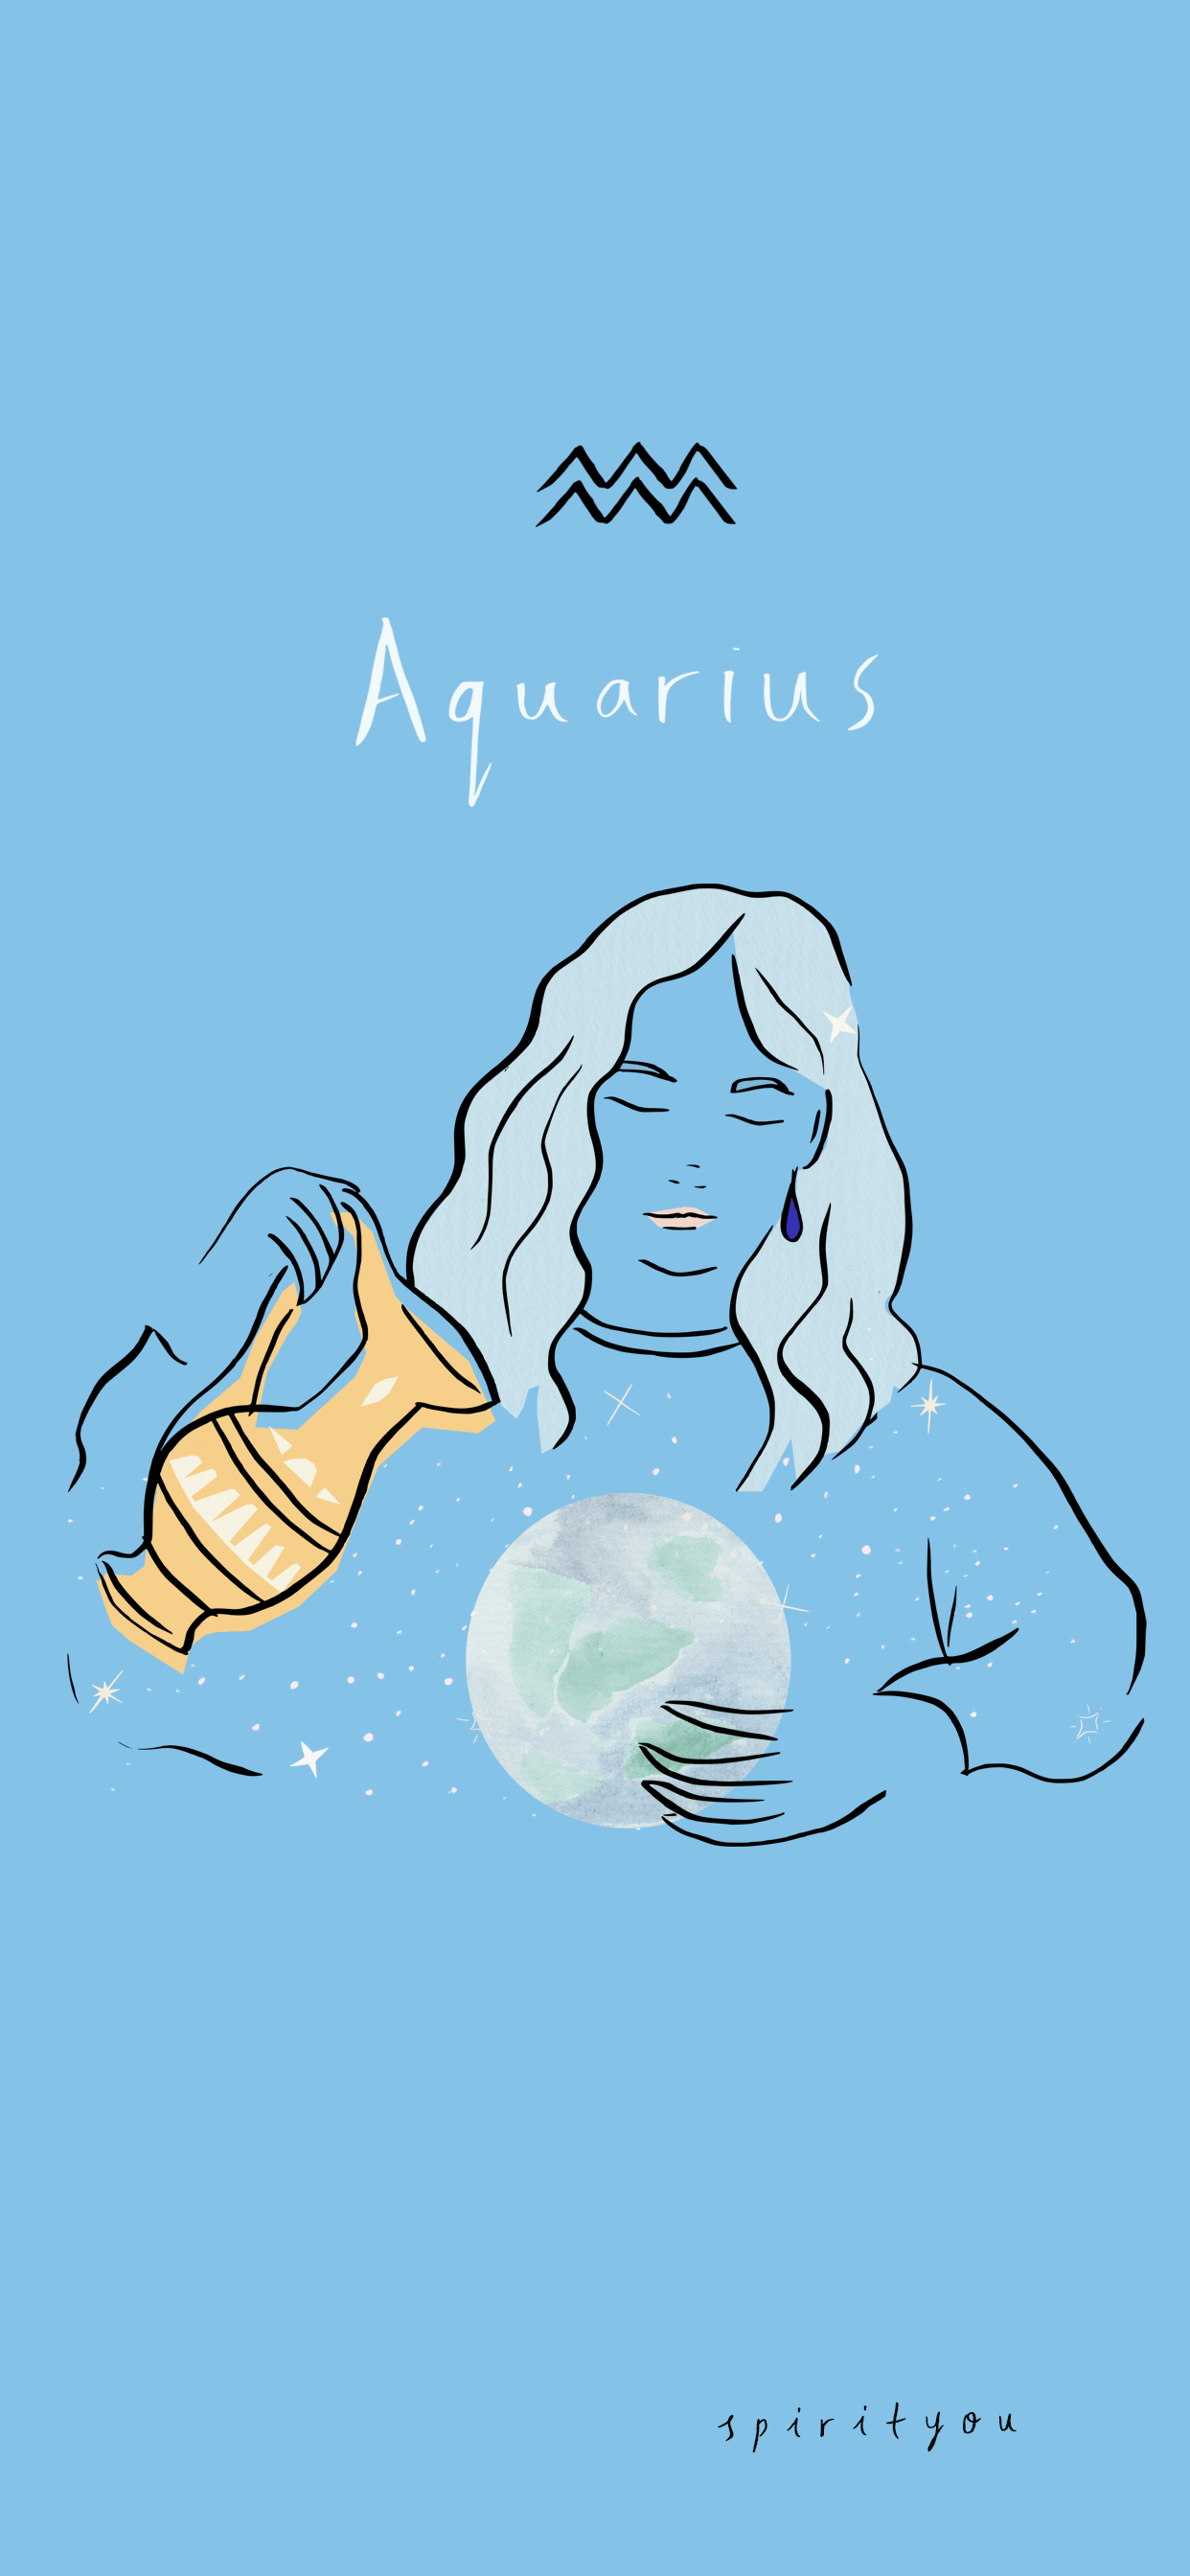 Aquarius woman holding a jug with water. - Spiritual